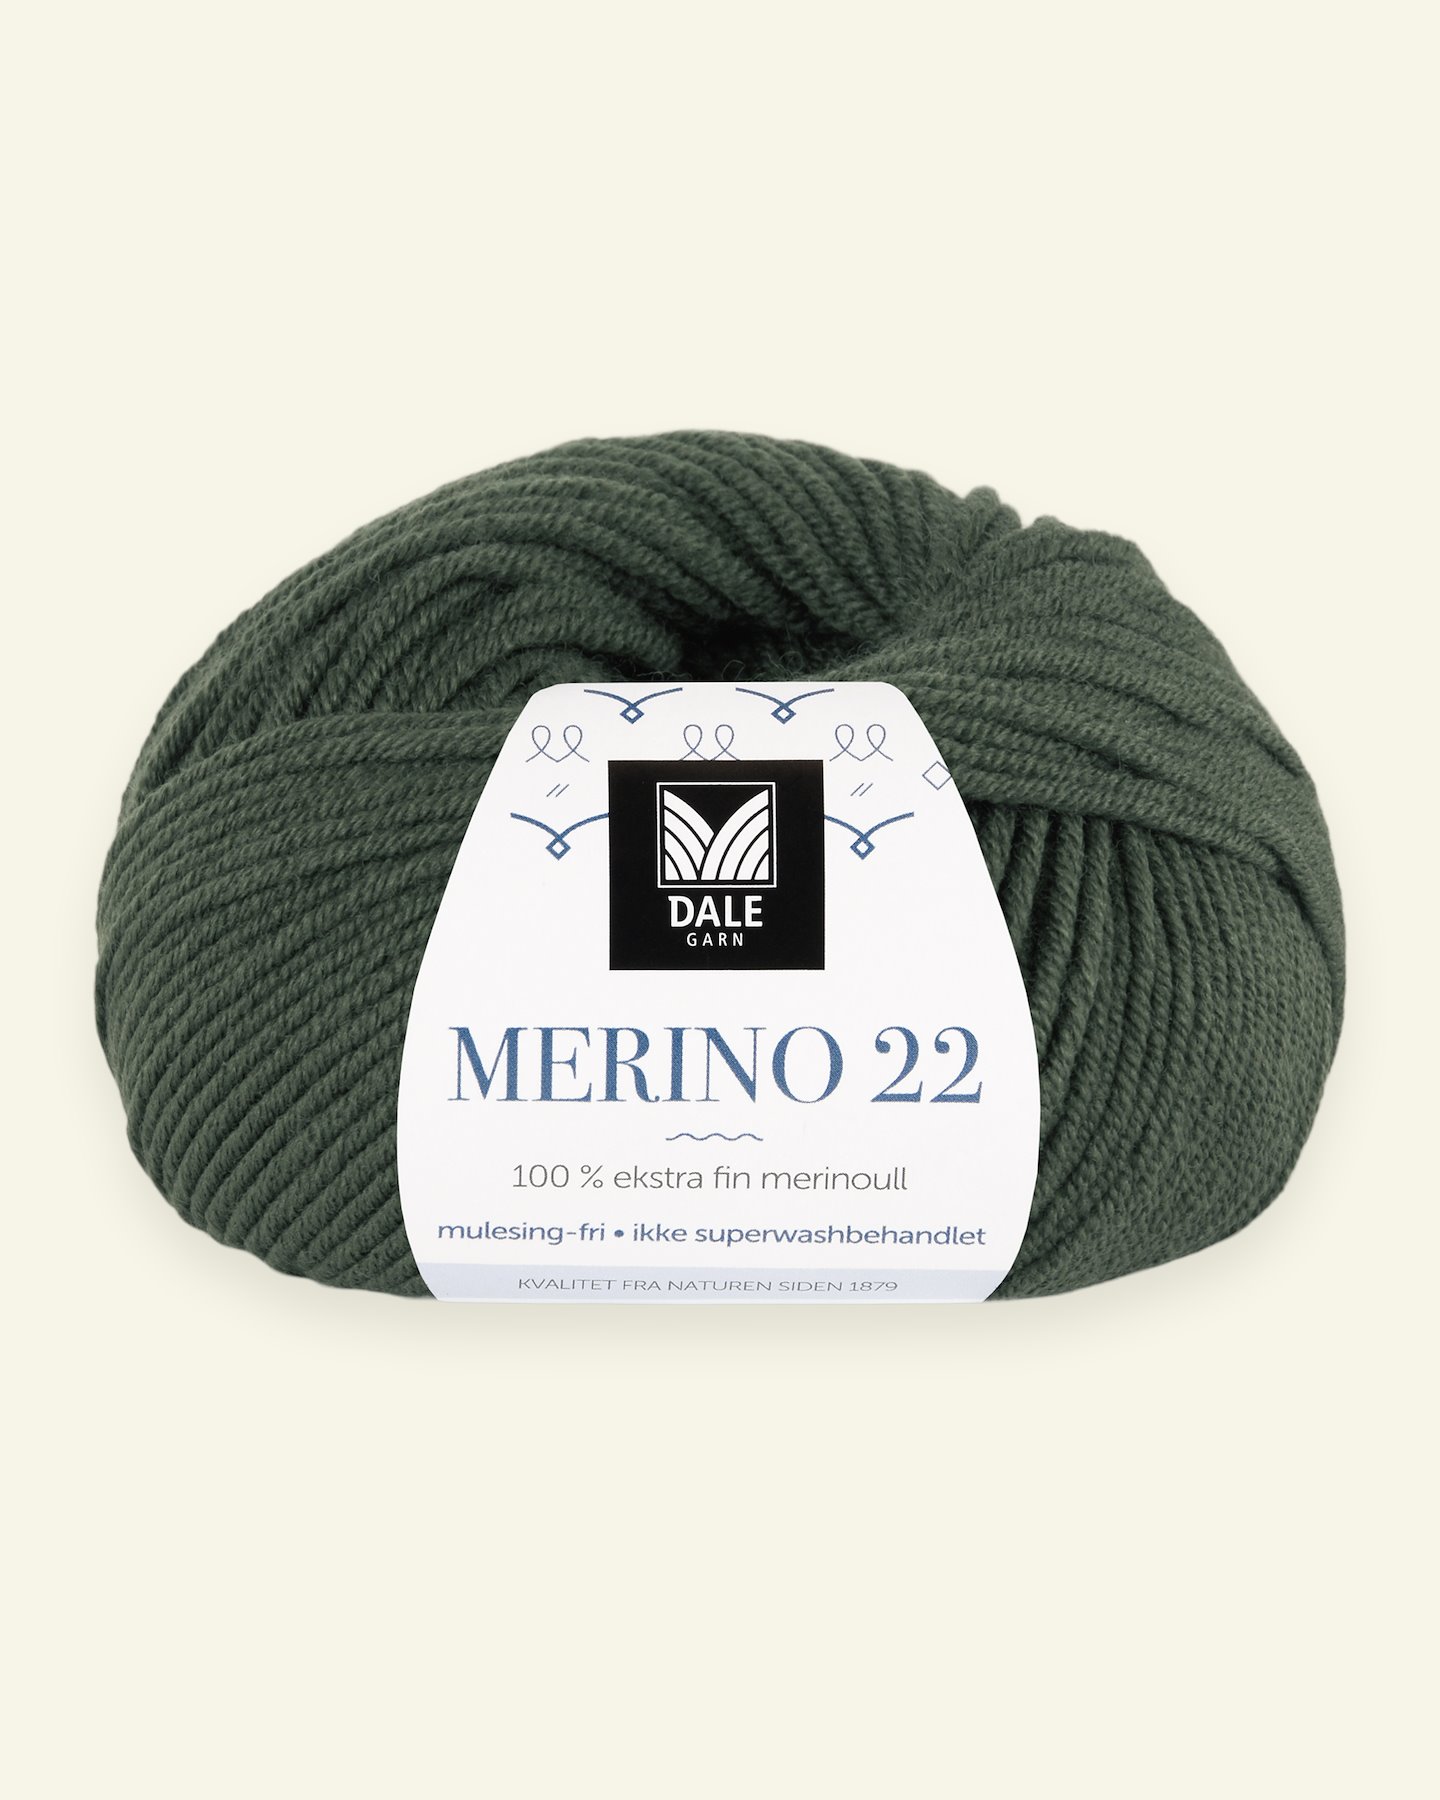 Dale Garn, 100% extra fine merino wool yarn, "Merino 22", army green 90000375_pack